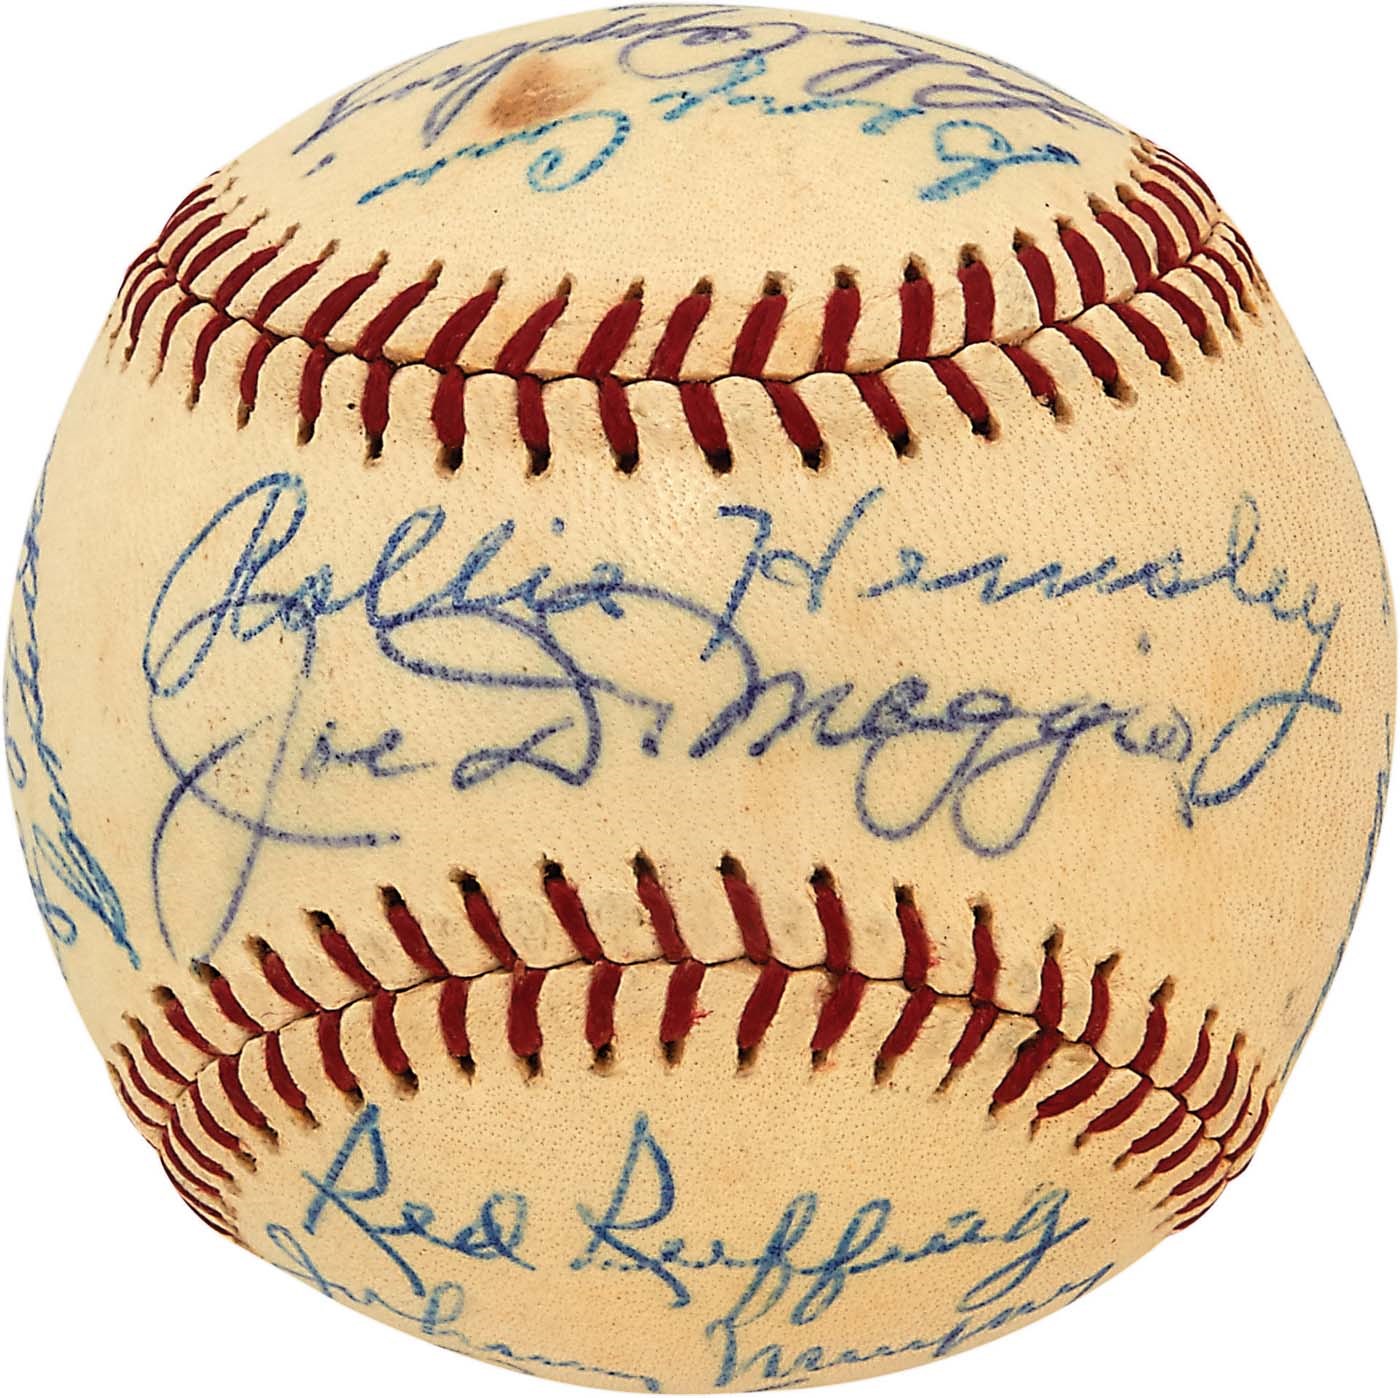 Baseball Autographs - 1939 All Stars Reunion Team Signed Baseball w/DiMaggio (JSA)